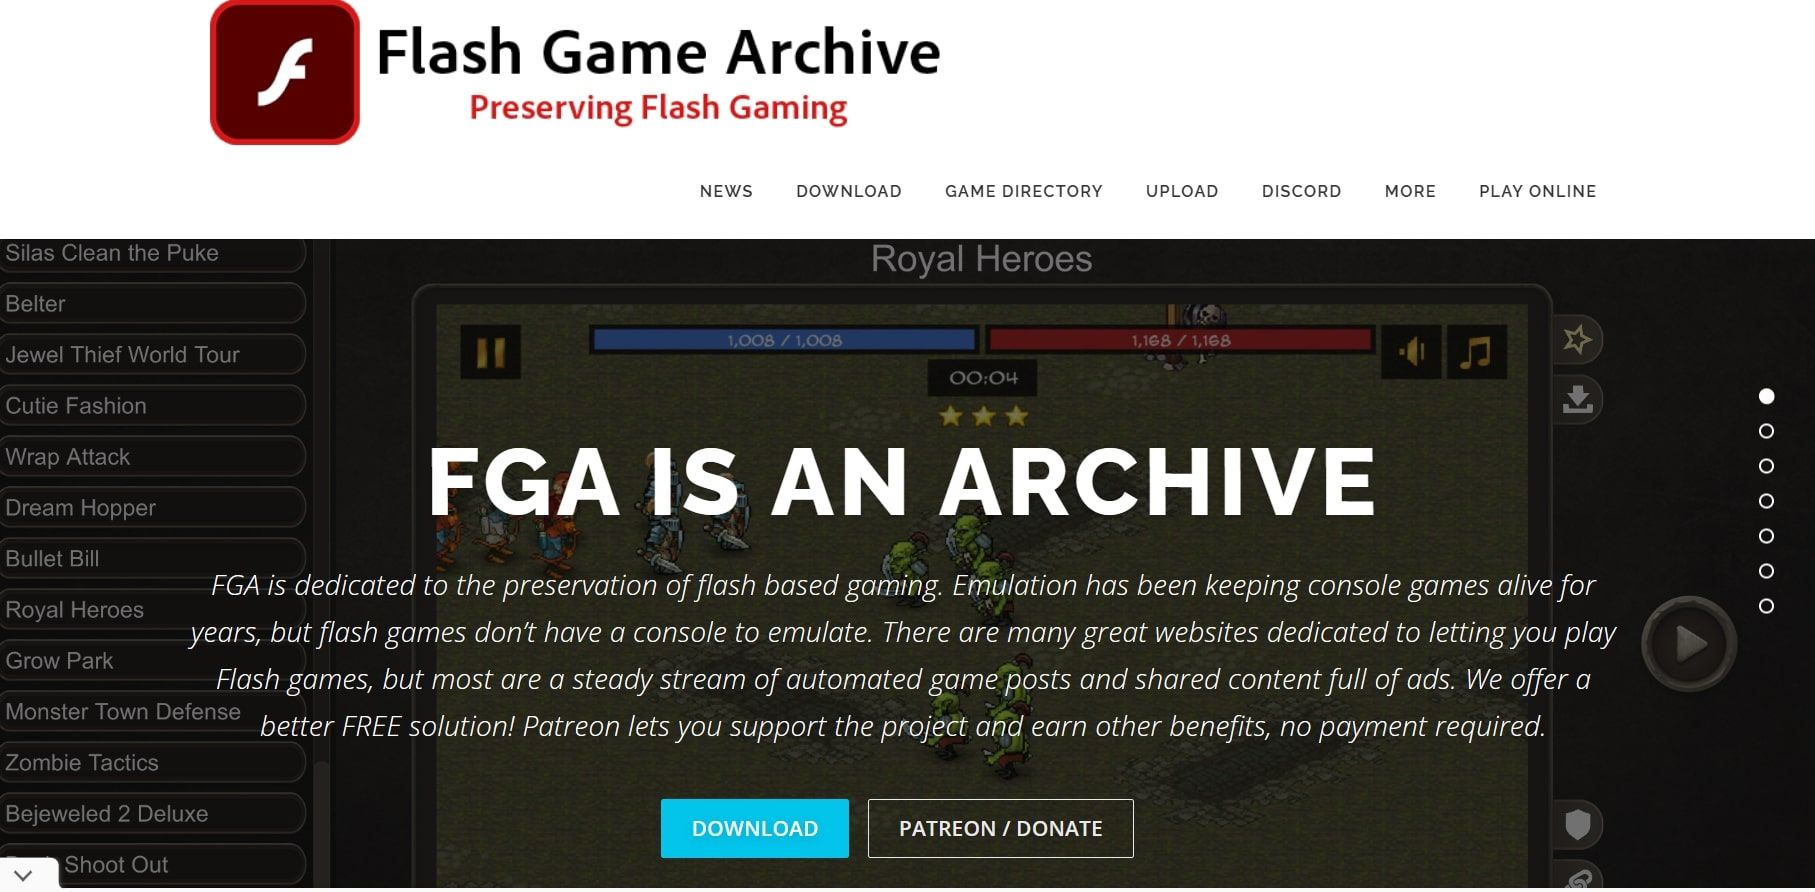 flash game archive website homepage screenshot